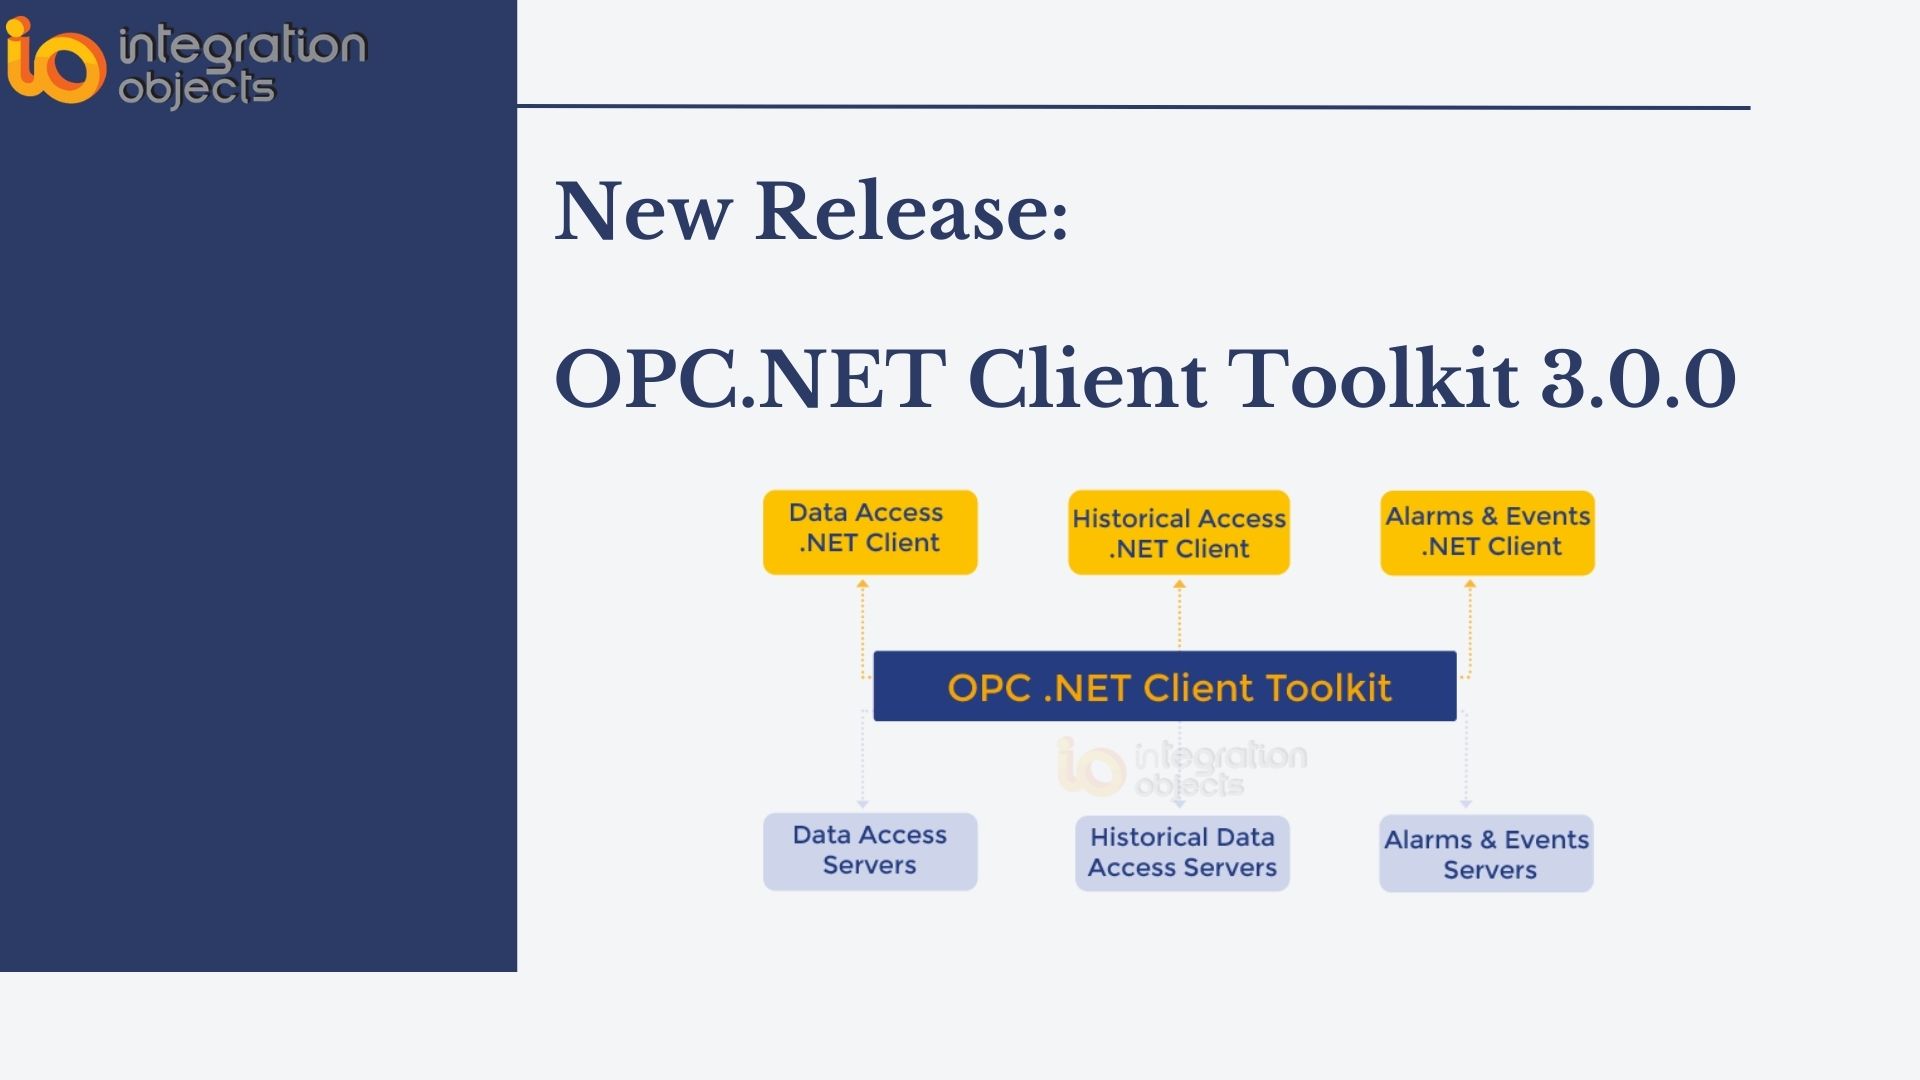 OPC .NET Client Toolkit